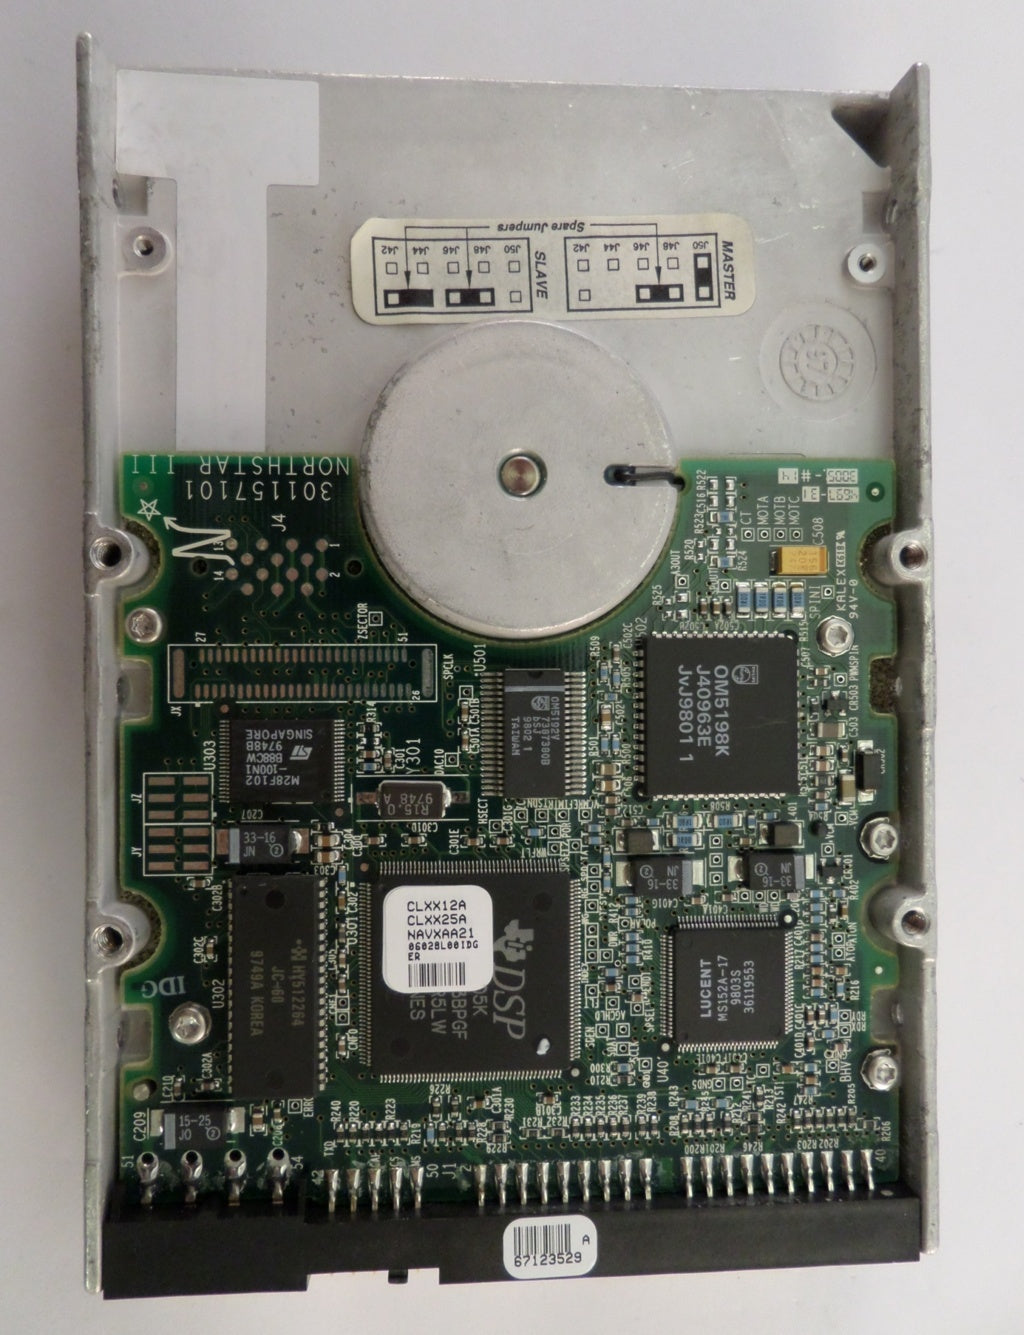 82160D2 - Maxtor 2.1Gb IDE 5200rpm 3.5in HDD - Refurbished